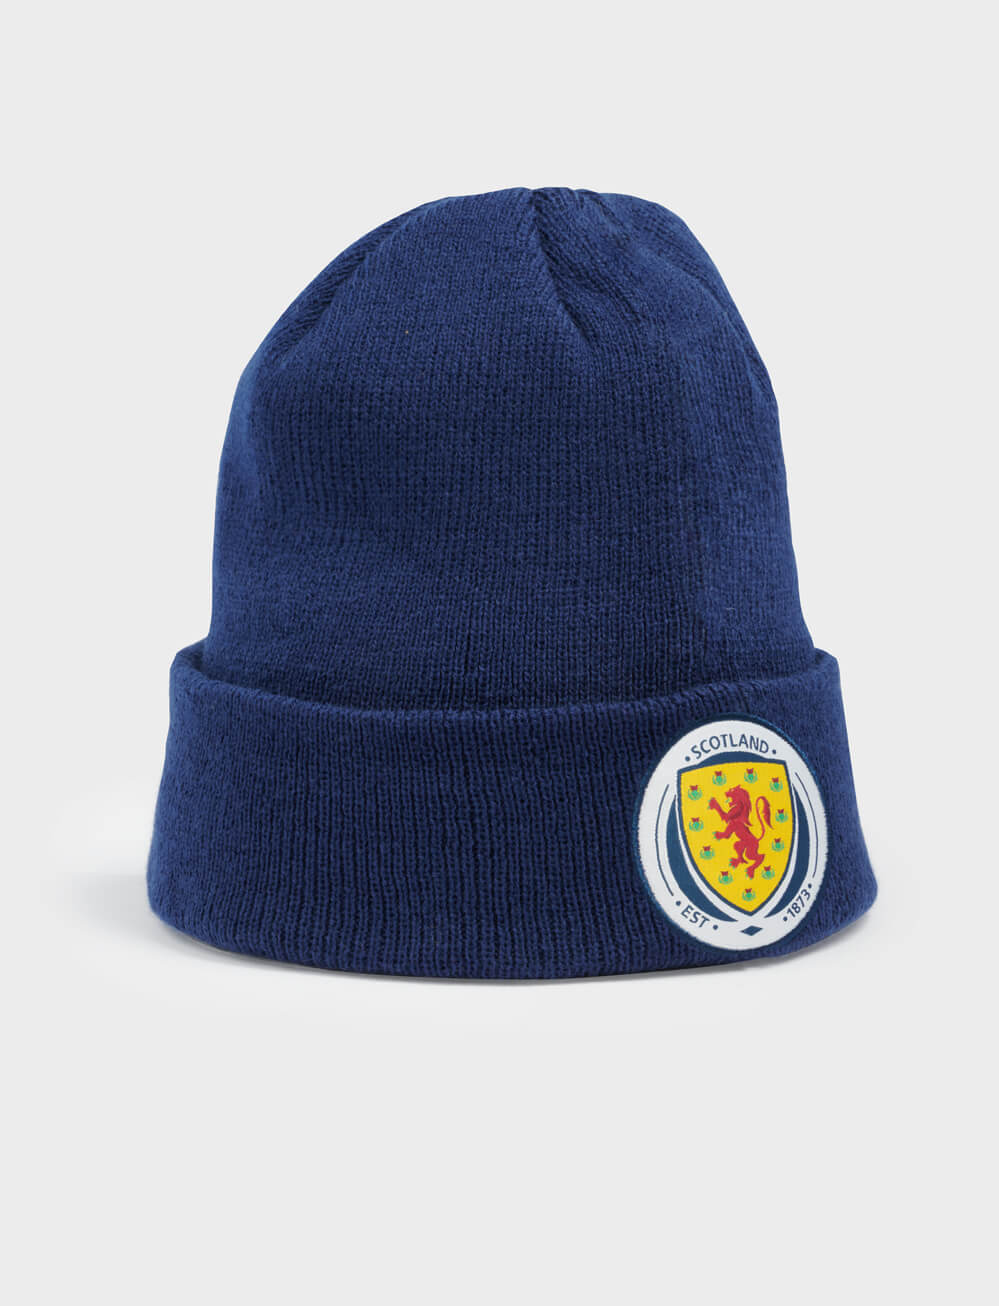 Official Team Scotland Beanie - Blue - The World Football Store